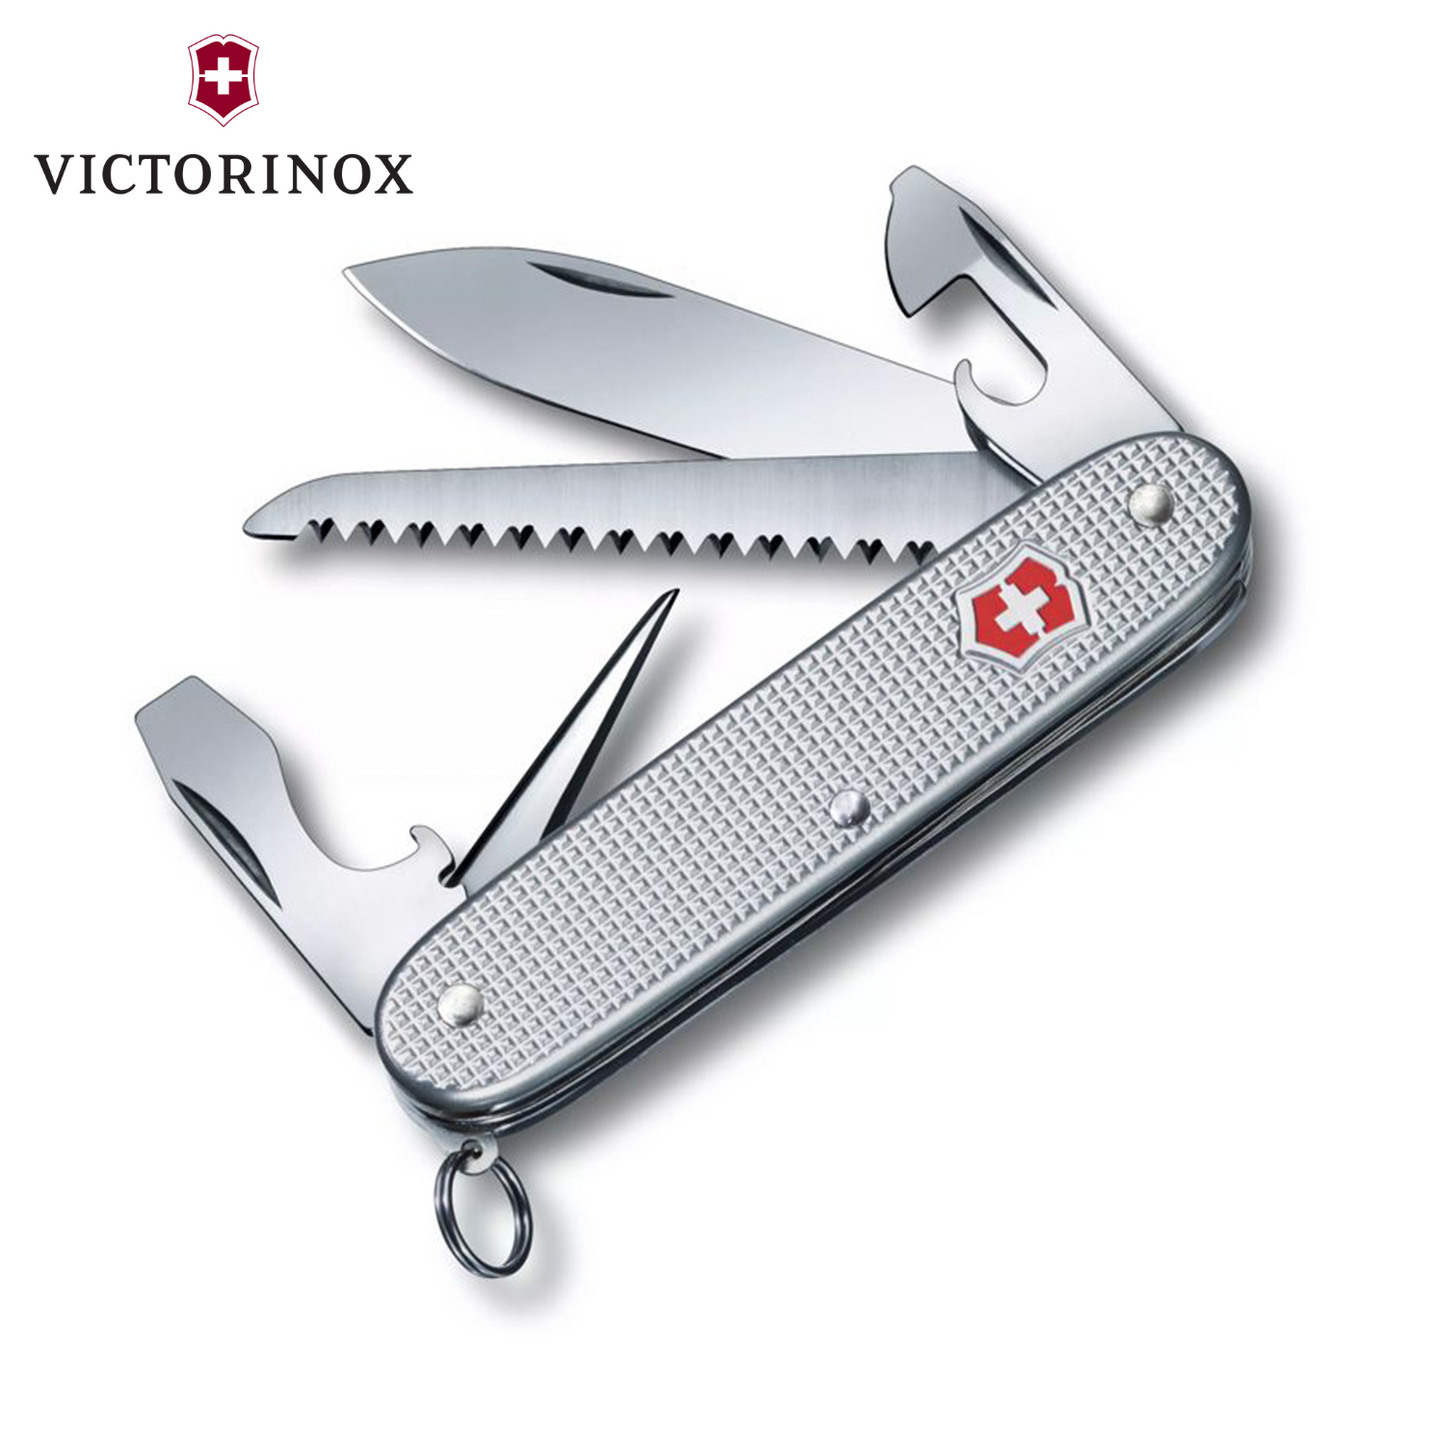 Victorinox Farmer Alox: The Versatile Mid-Size Swiss Army Knife